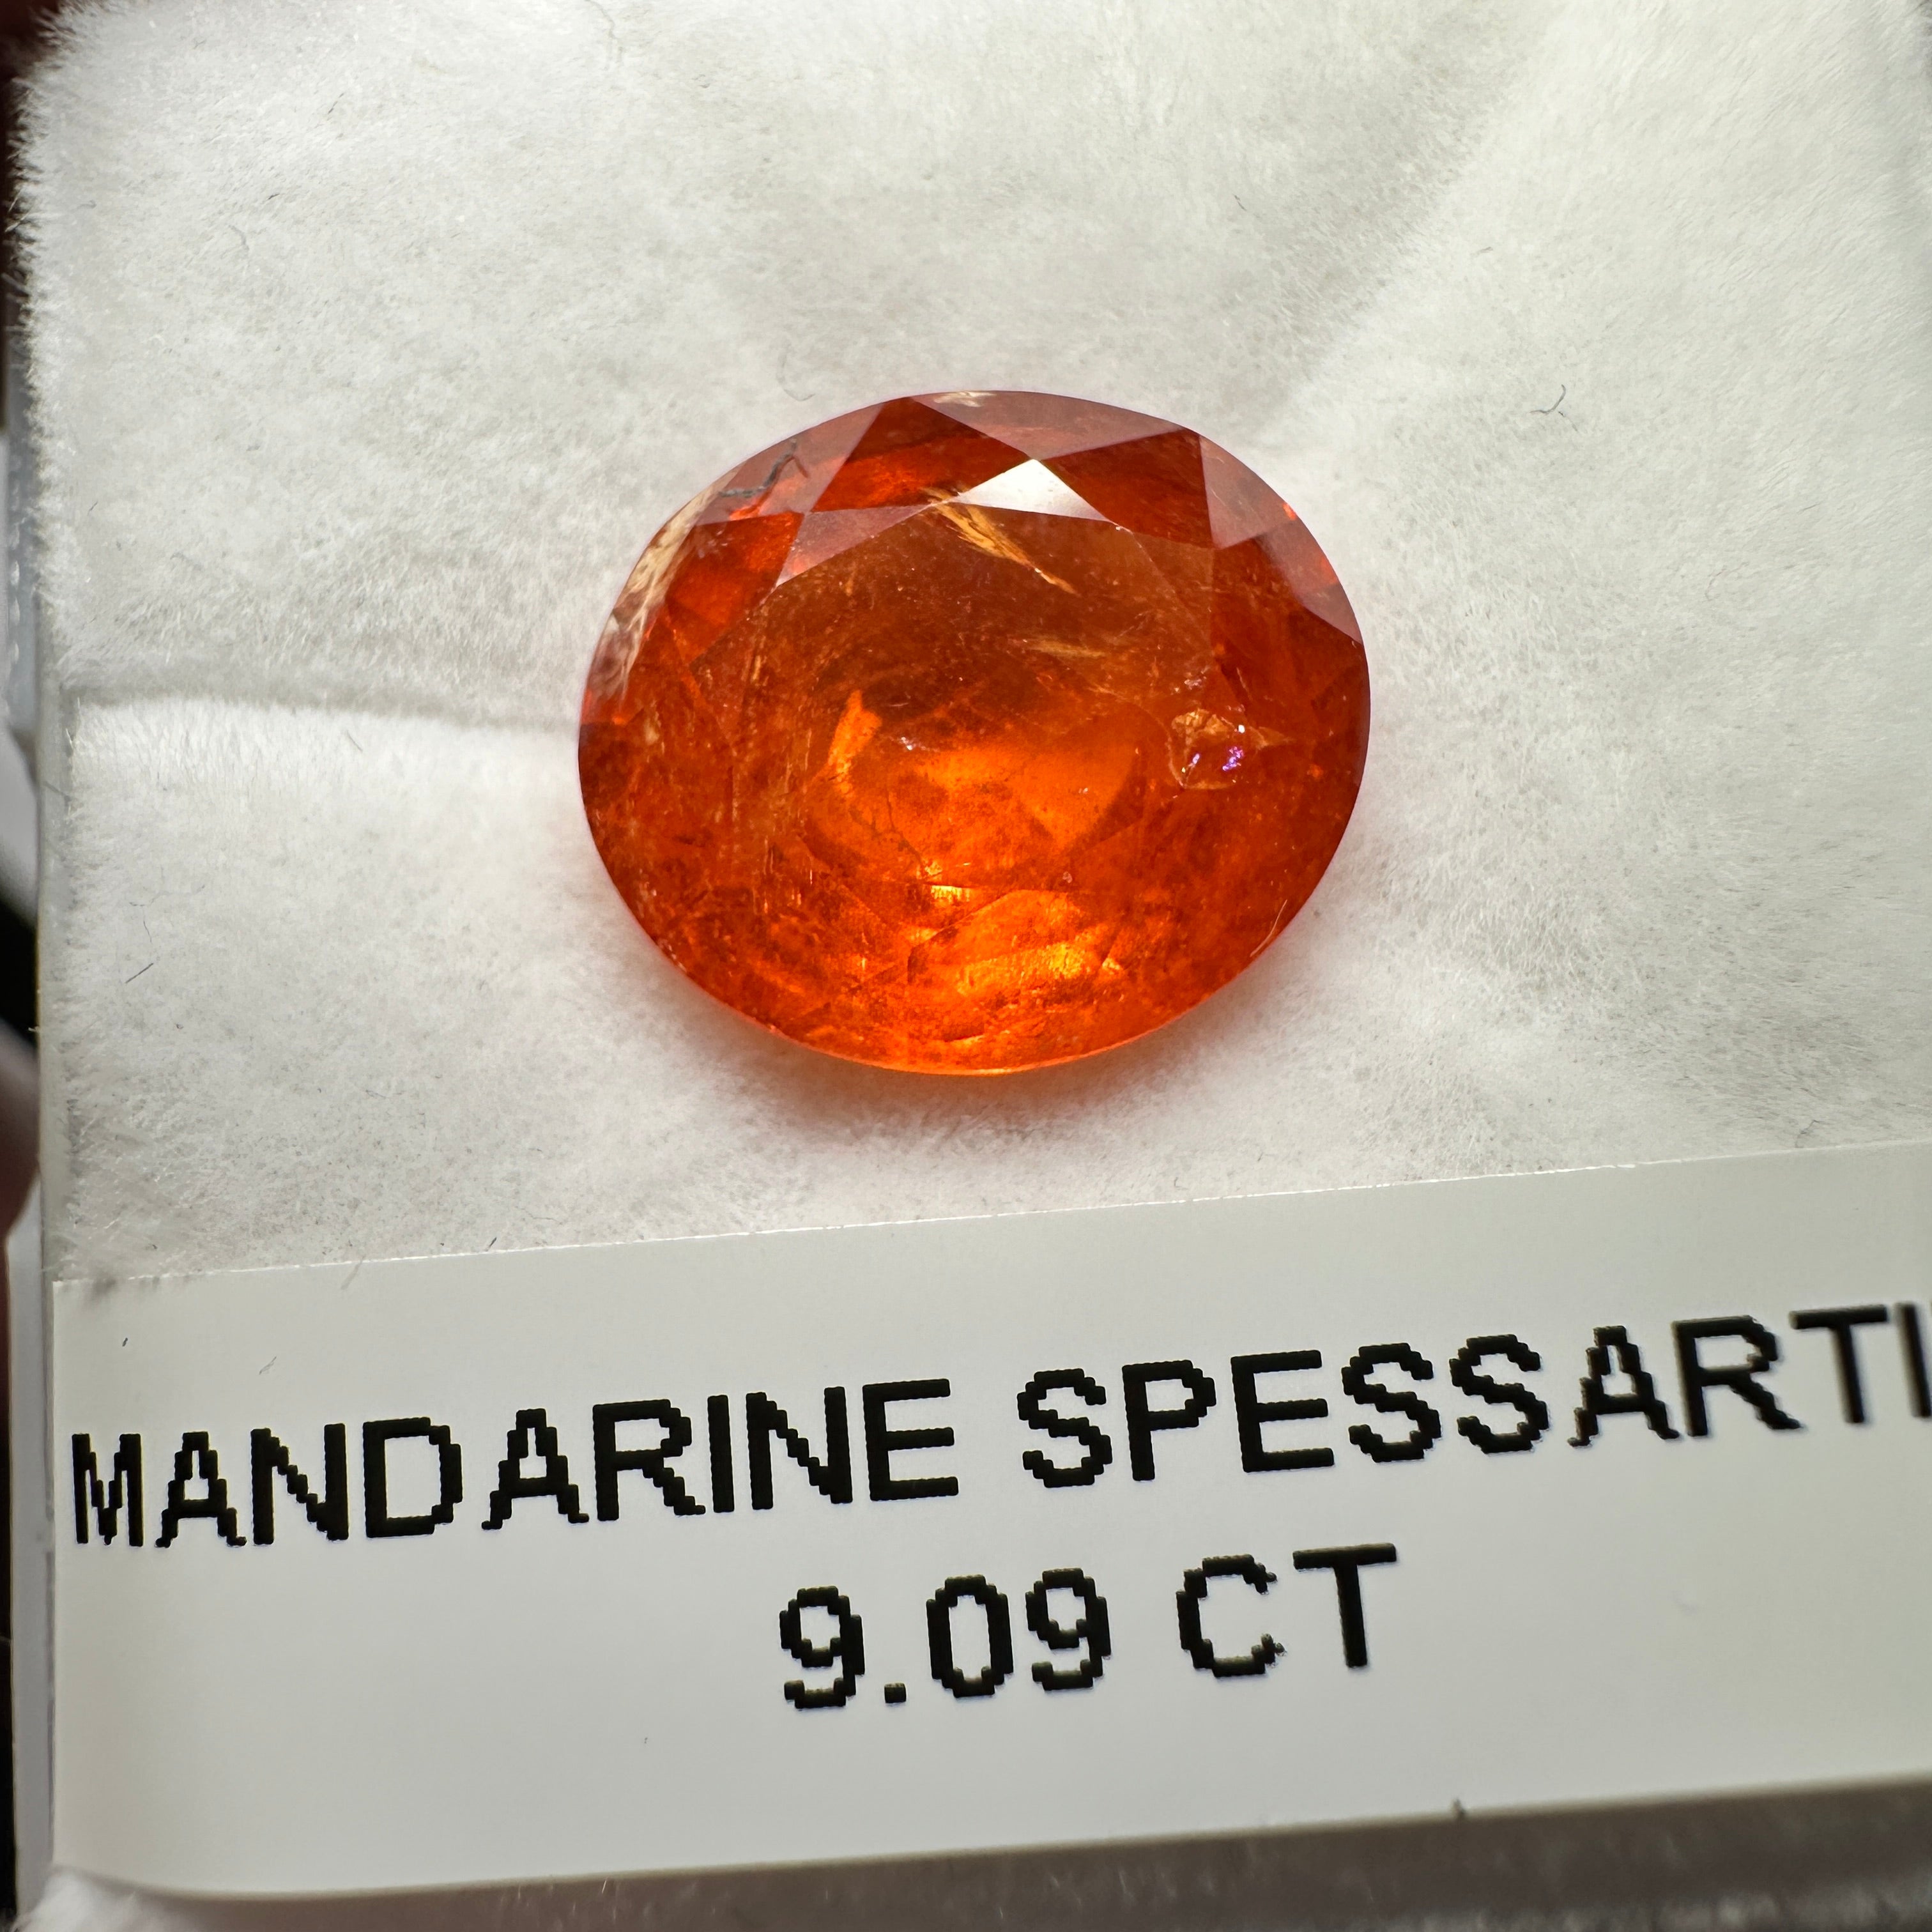 9.09ct Mandarin Spessartite Garnet, Untreated Unheated. 12.8 x 11.2 x 6.8mm, stone has some veils, slight sugar and inclusions